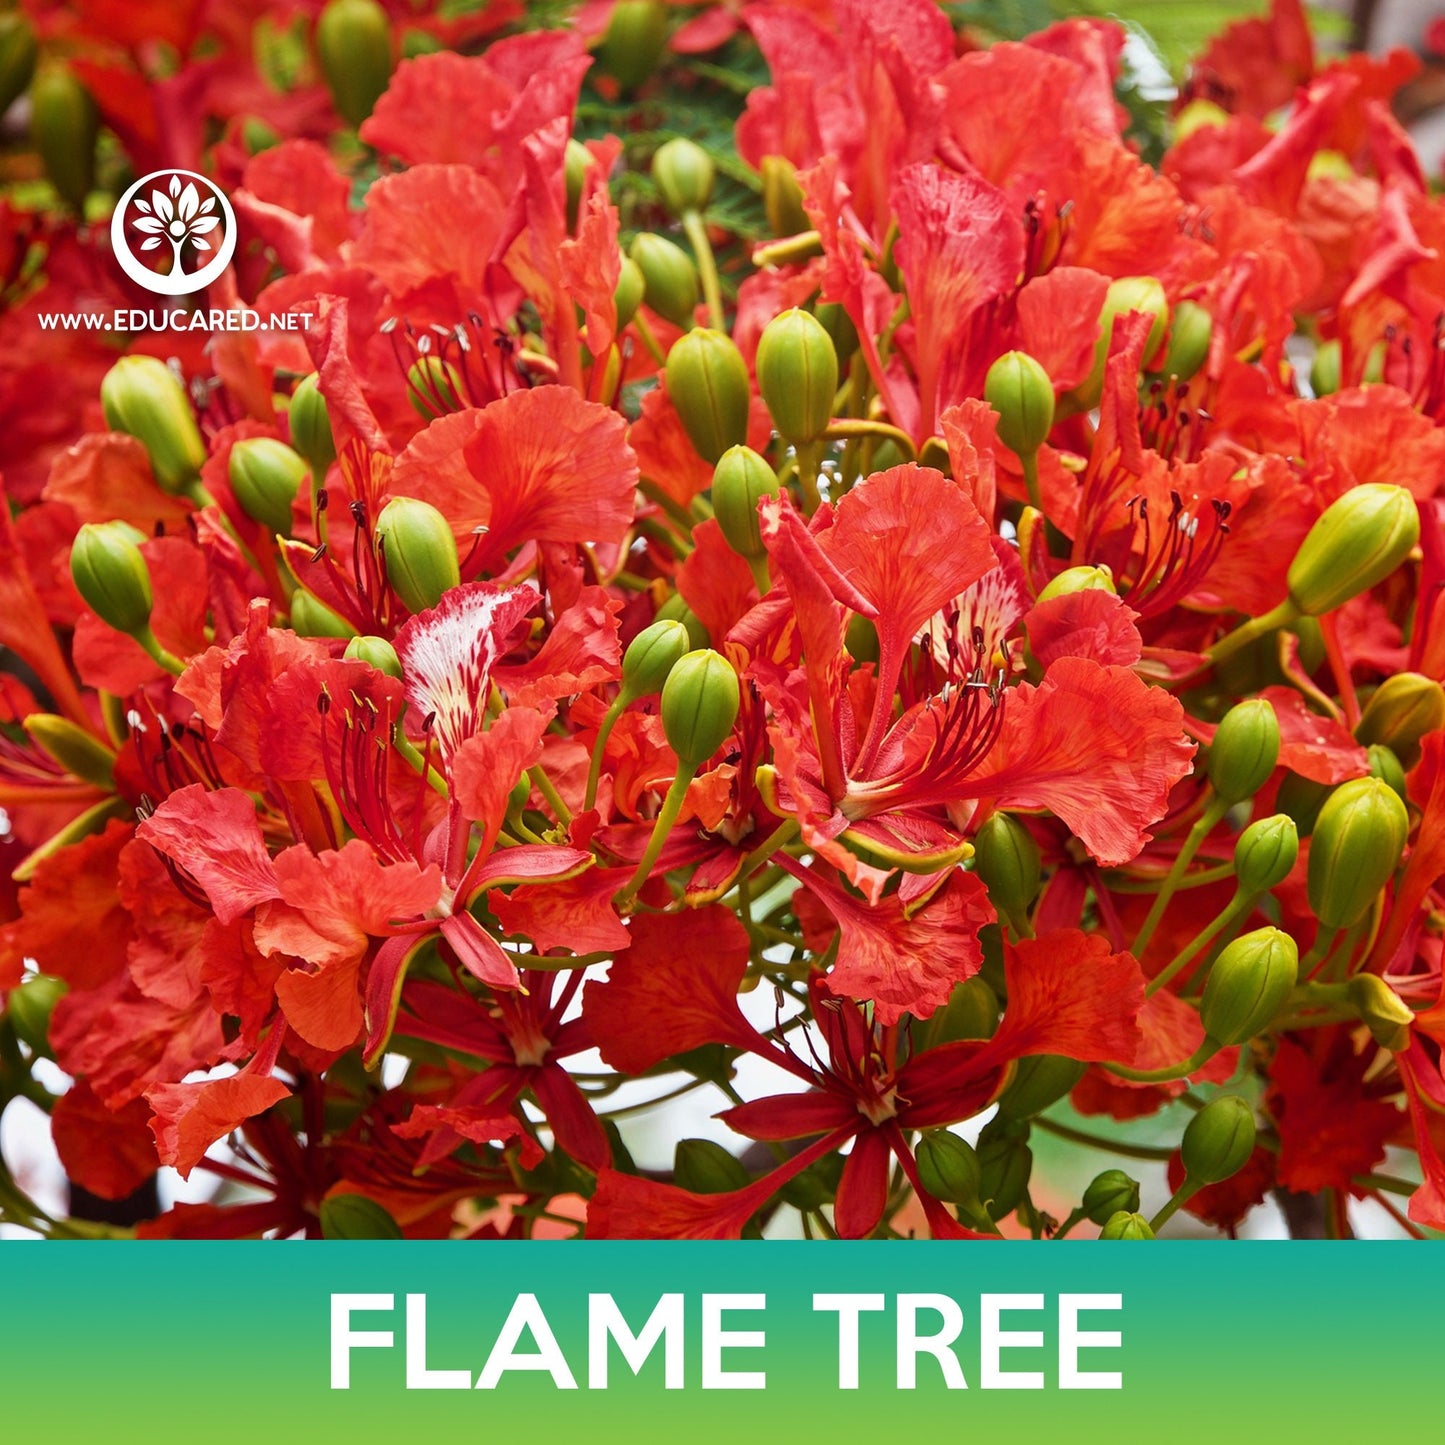 Flame Tree Seeds, Royal Poinciana, Delonix regia